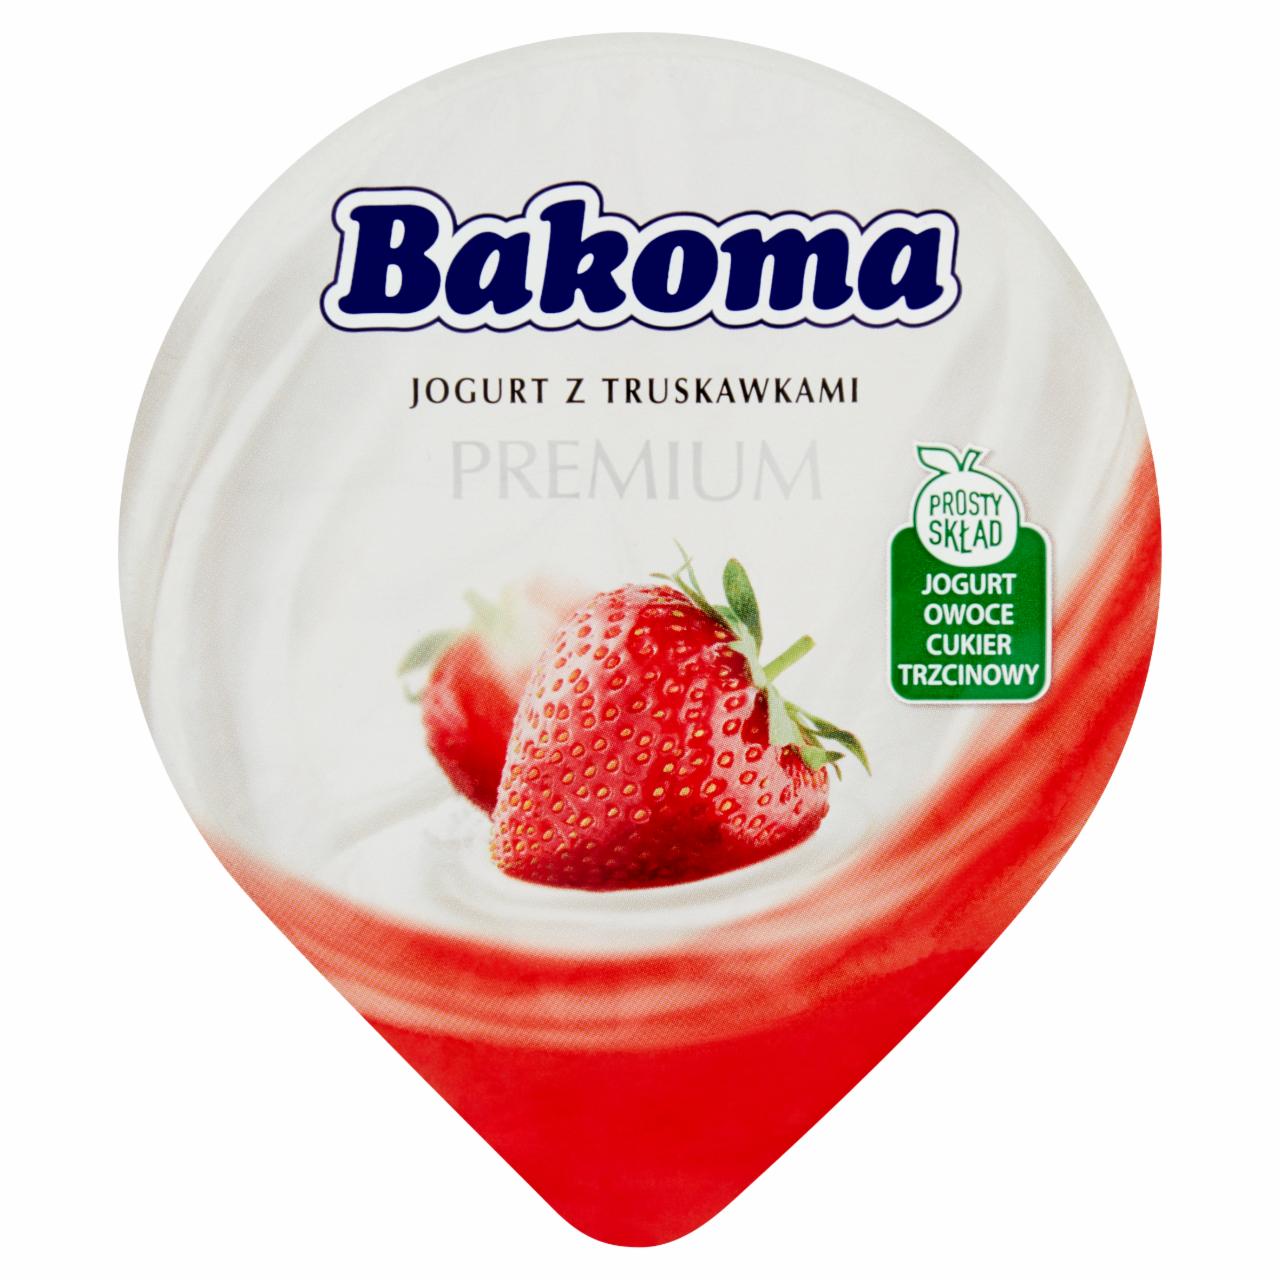 Zdjęcia - Bakoma Premium Jogurt z truskawkami 140 g